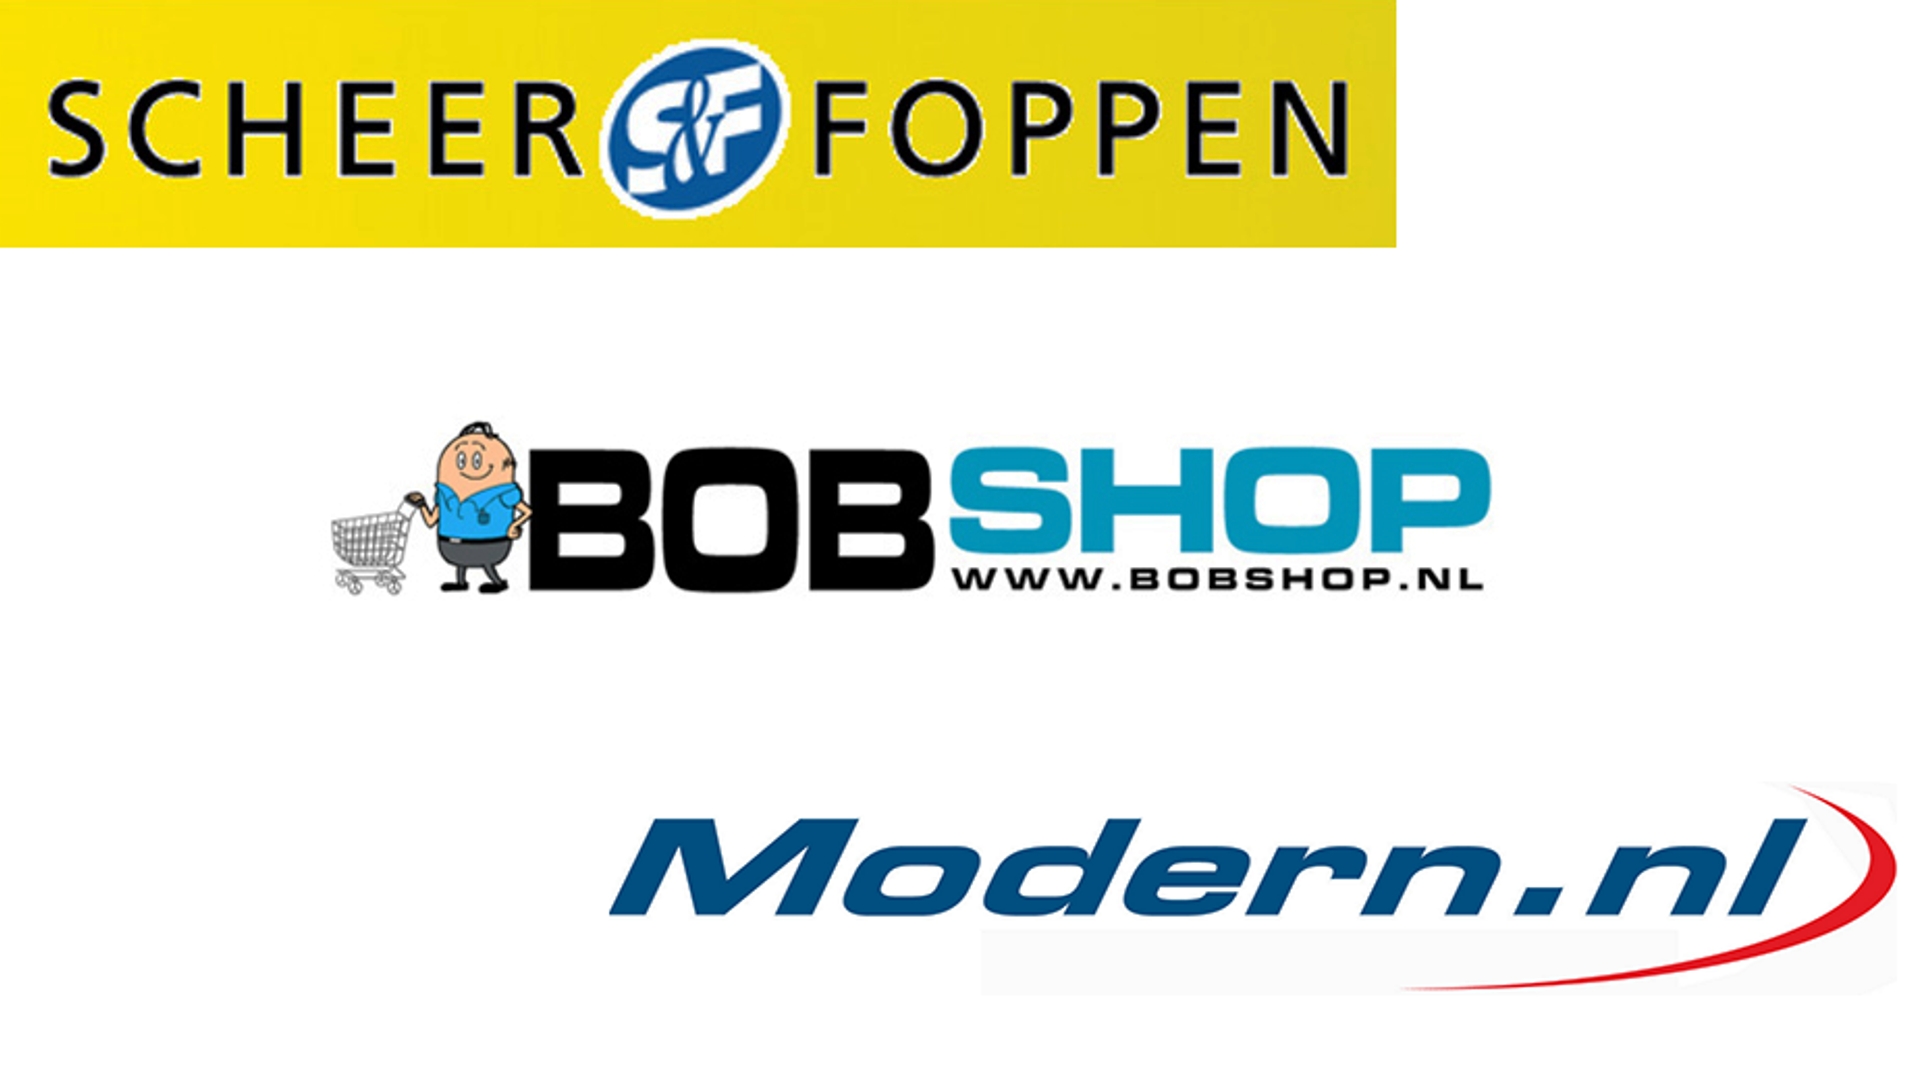 logos bobshop scheer & foppen modern.nl 930